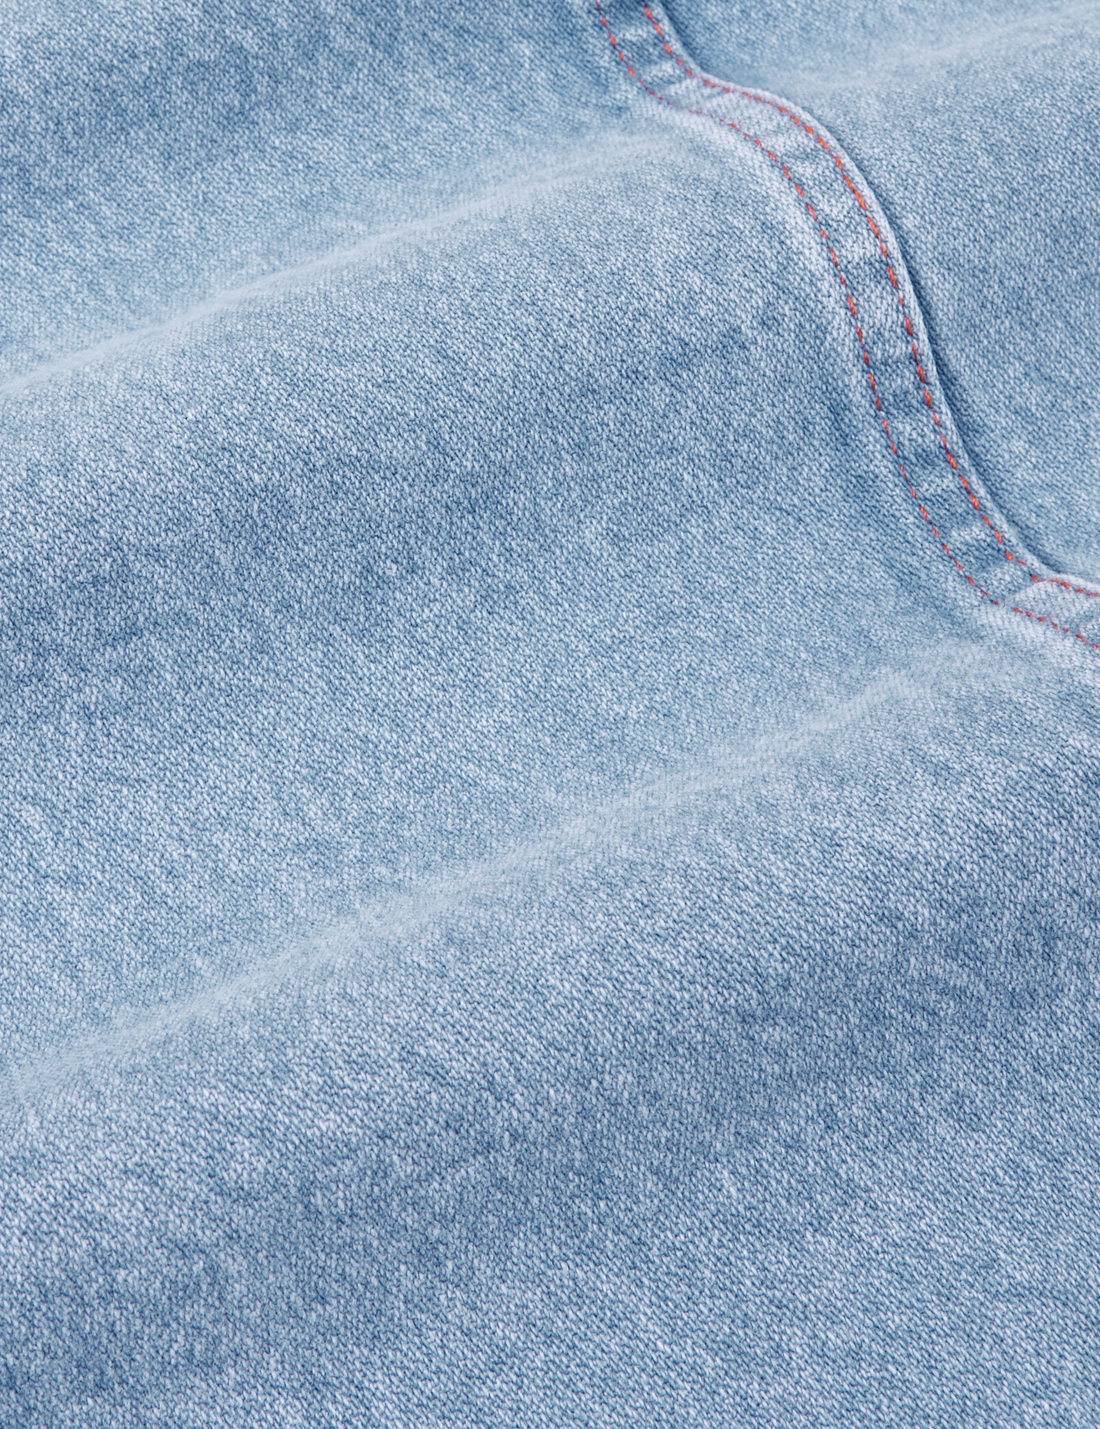 Indigo Denim Work Jacket in Light Wash fabric detail close up